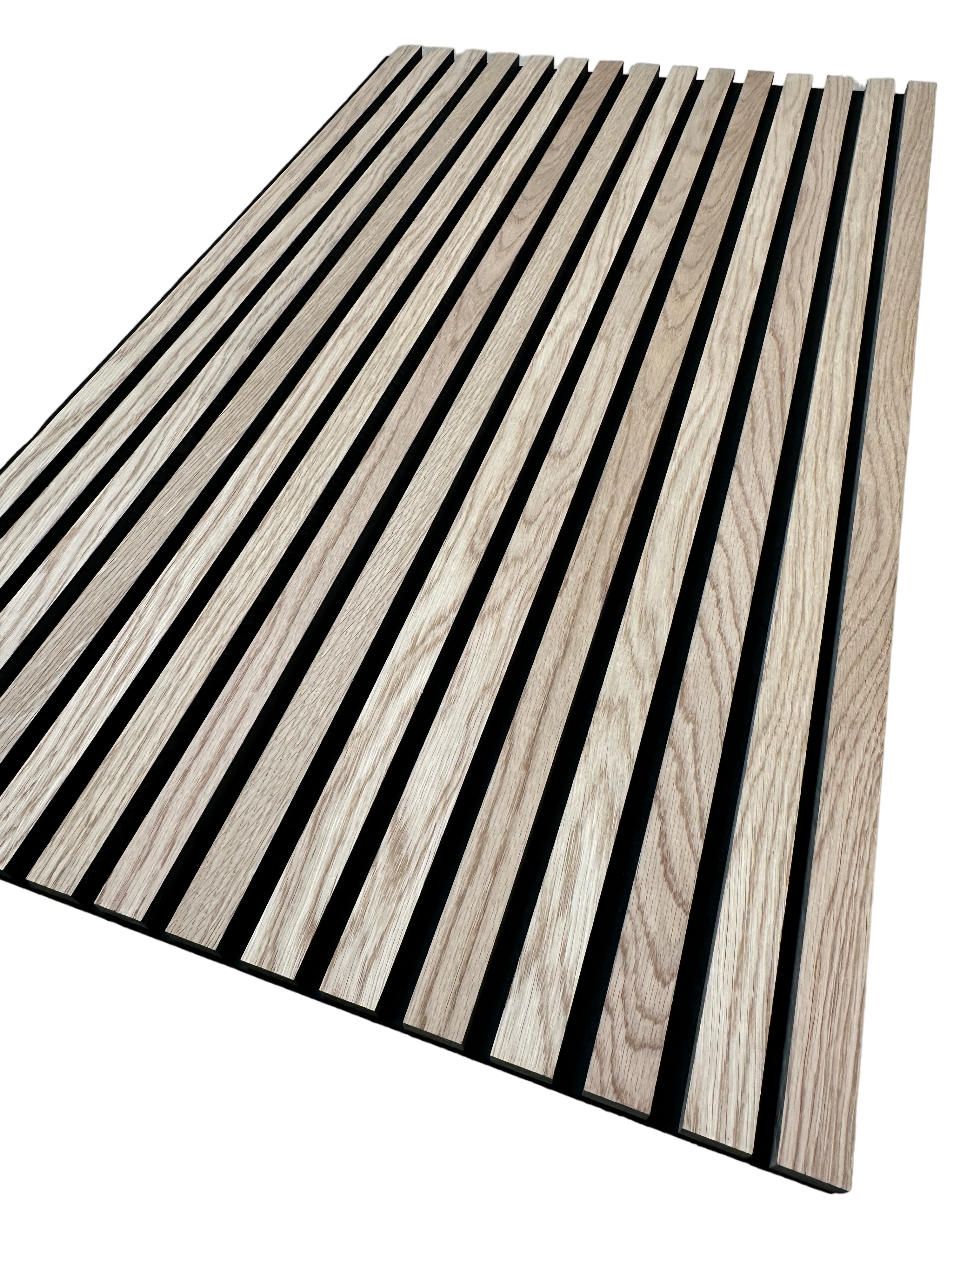 Acoustic Mini Flat Wood Acoustic Panels Oak Color 39.5” x 24" Panel Wall Art